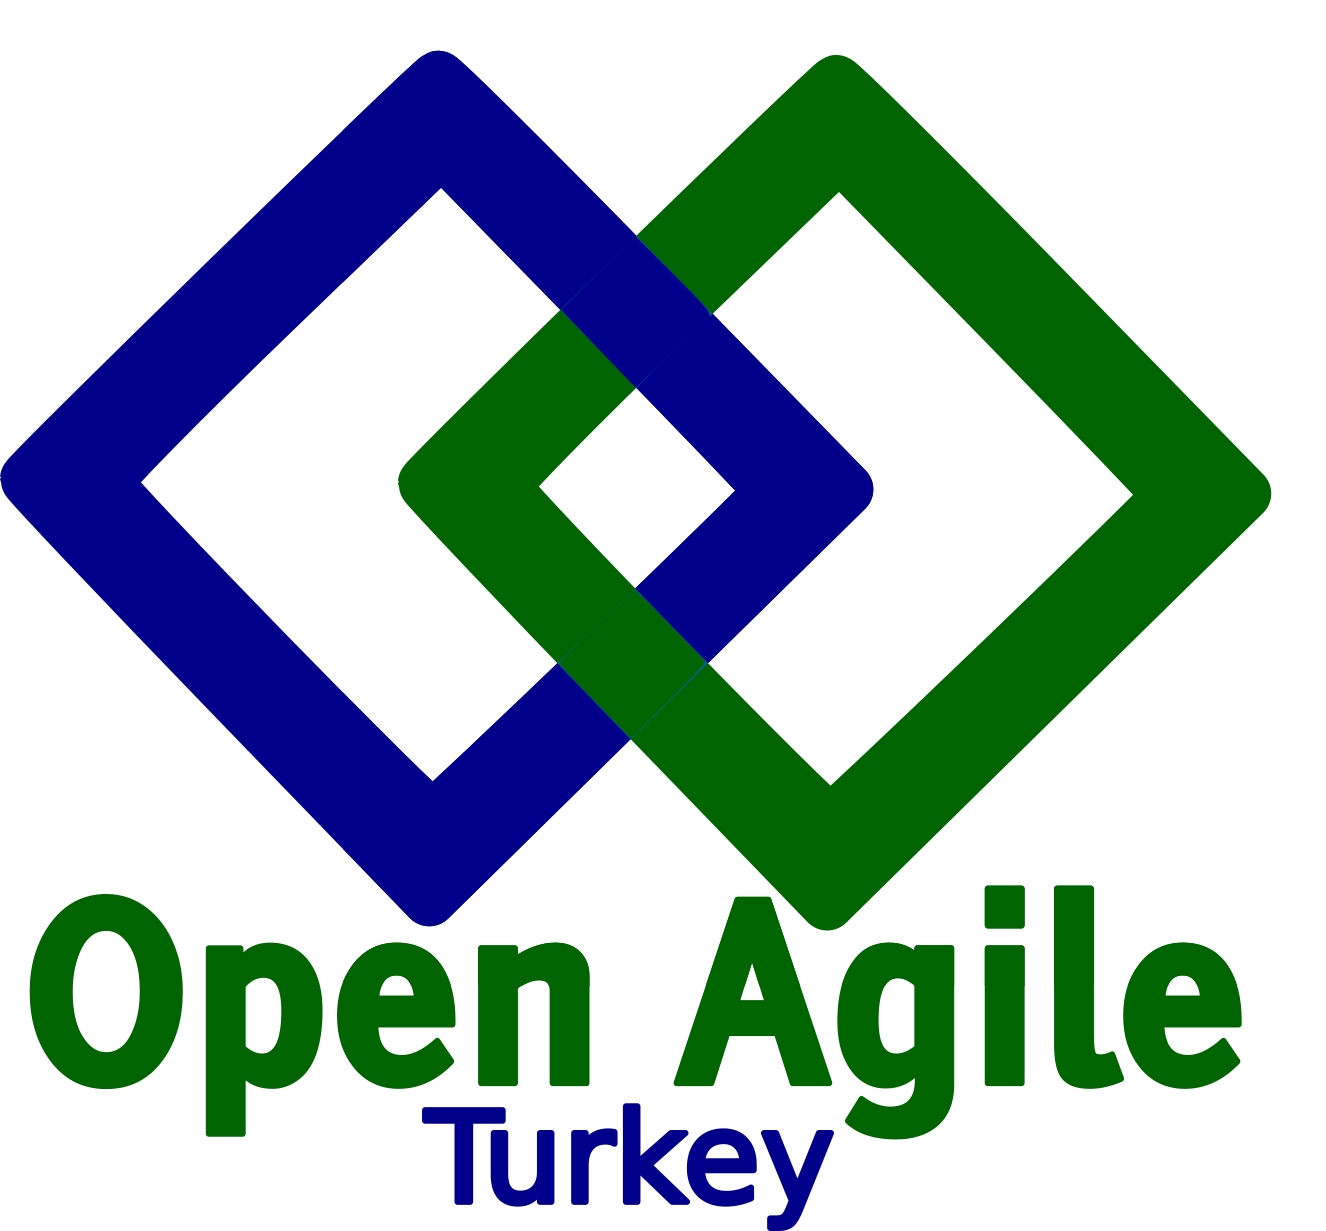 OpenAgile